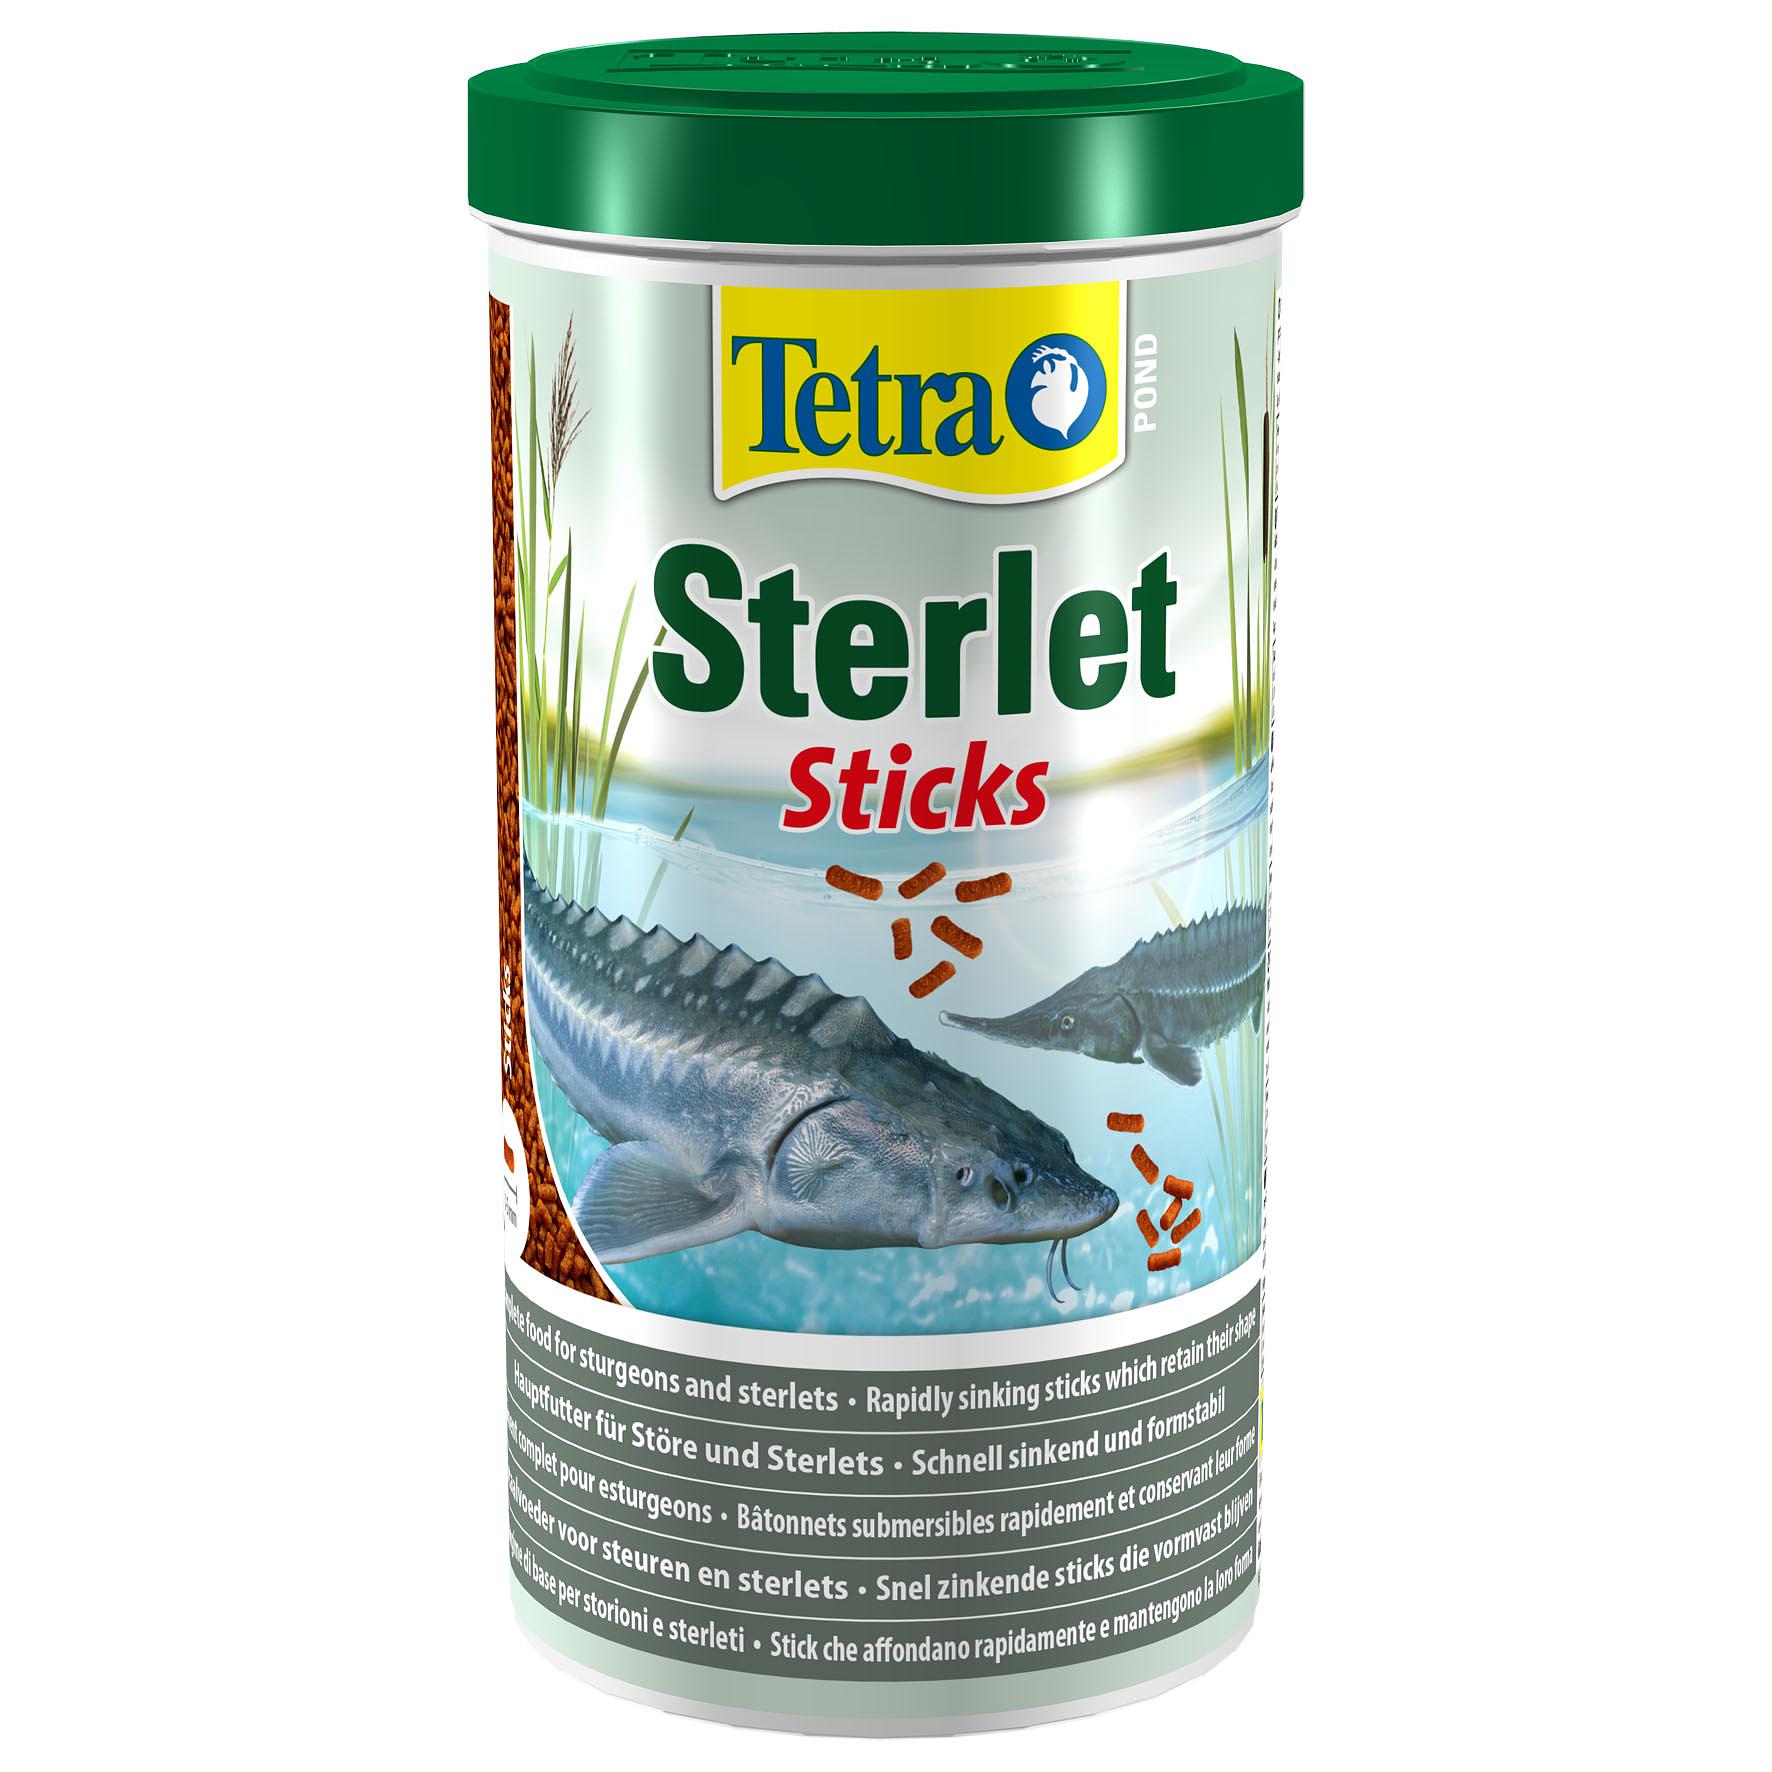 TetraPond Sterlet Sticks 1 litre